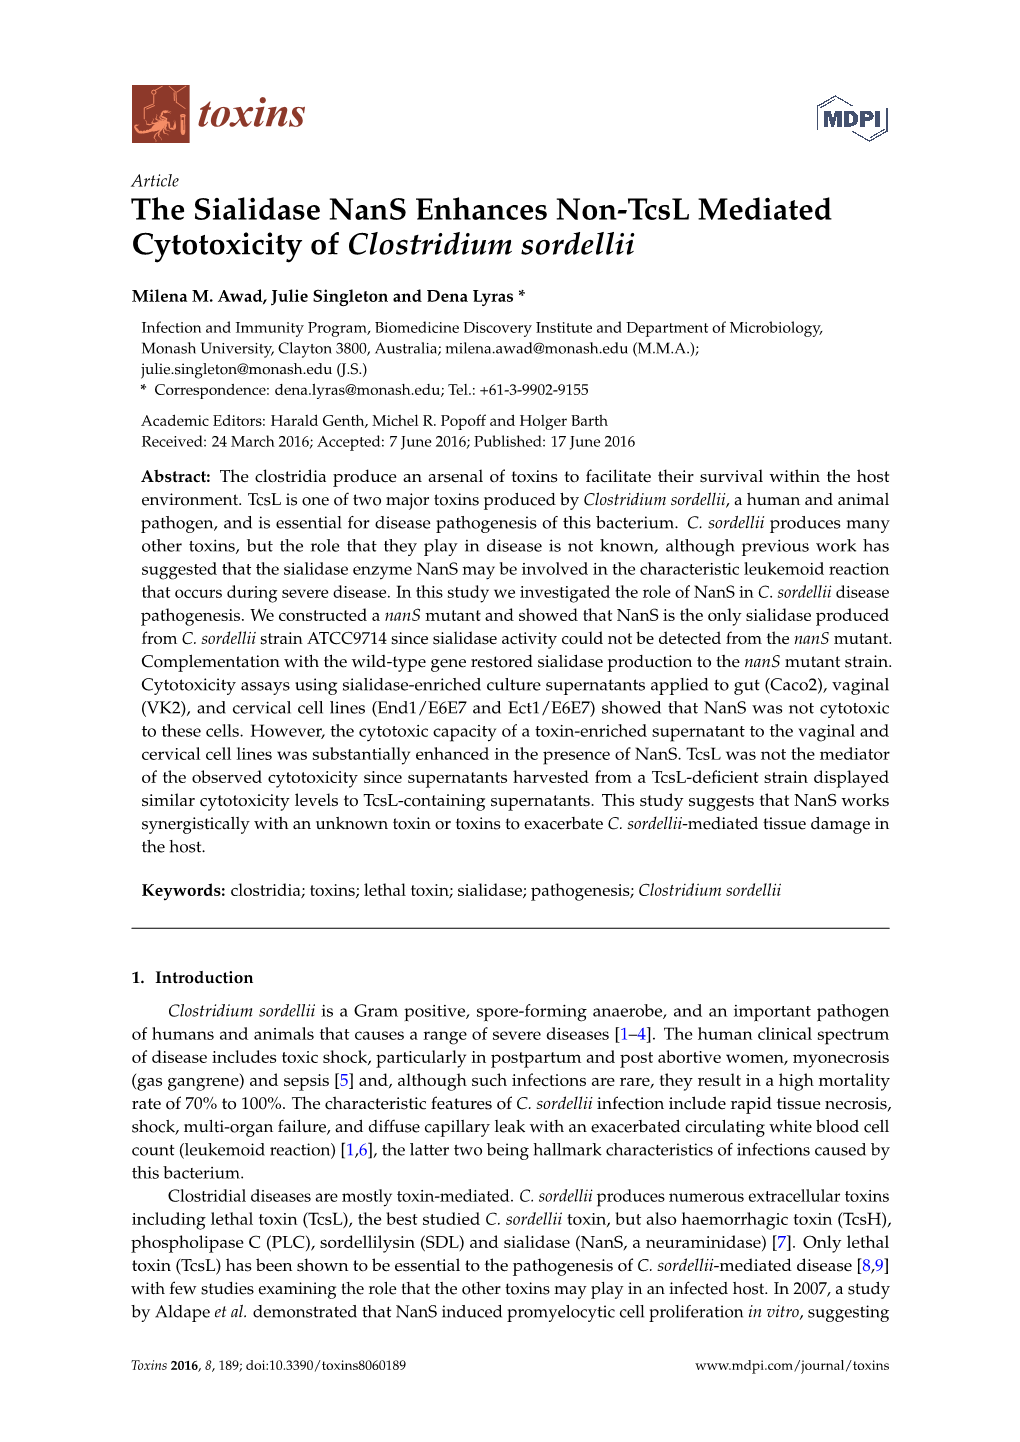 The Sialidase Nans Enhances Non-Tcsl Mediated Cytotoxicity of Clostridium Sordellii